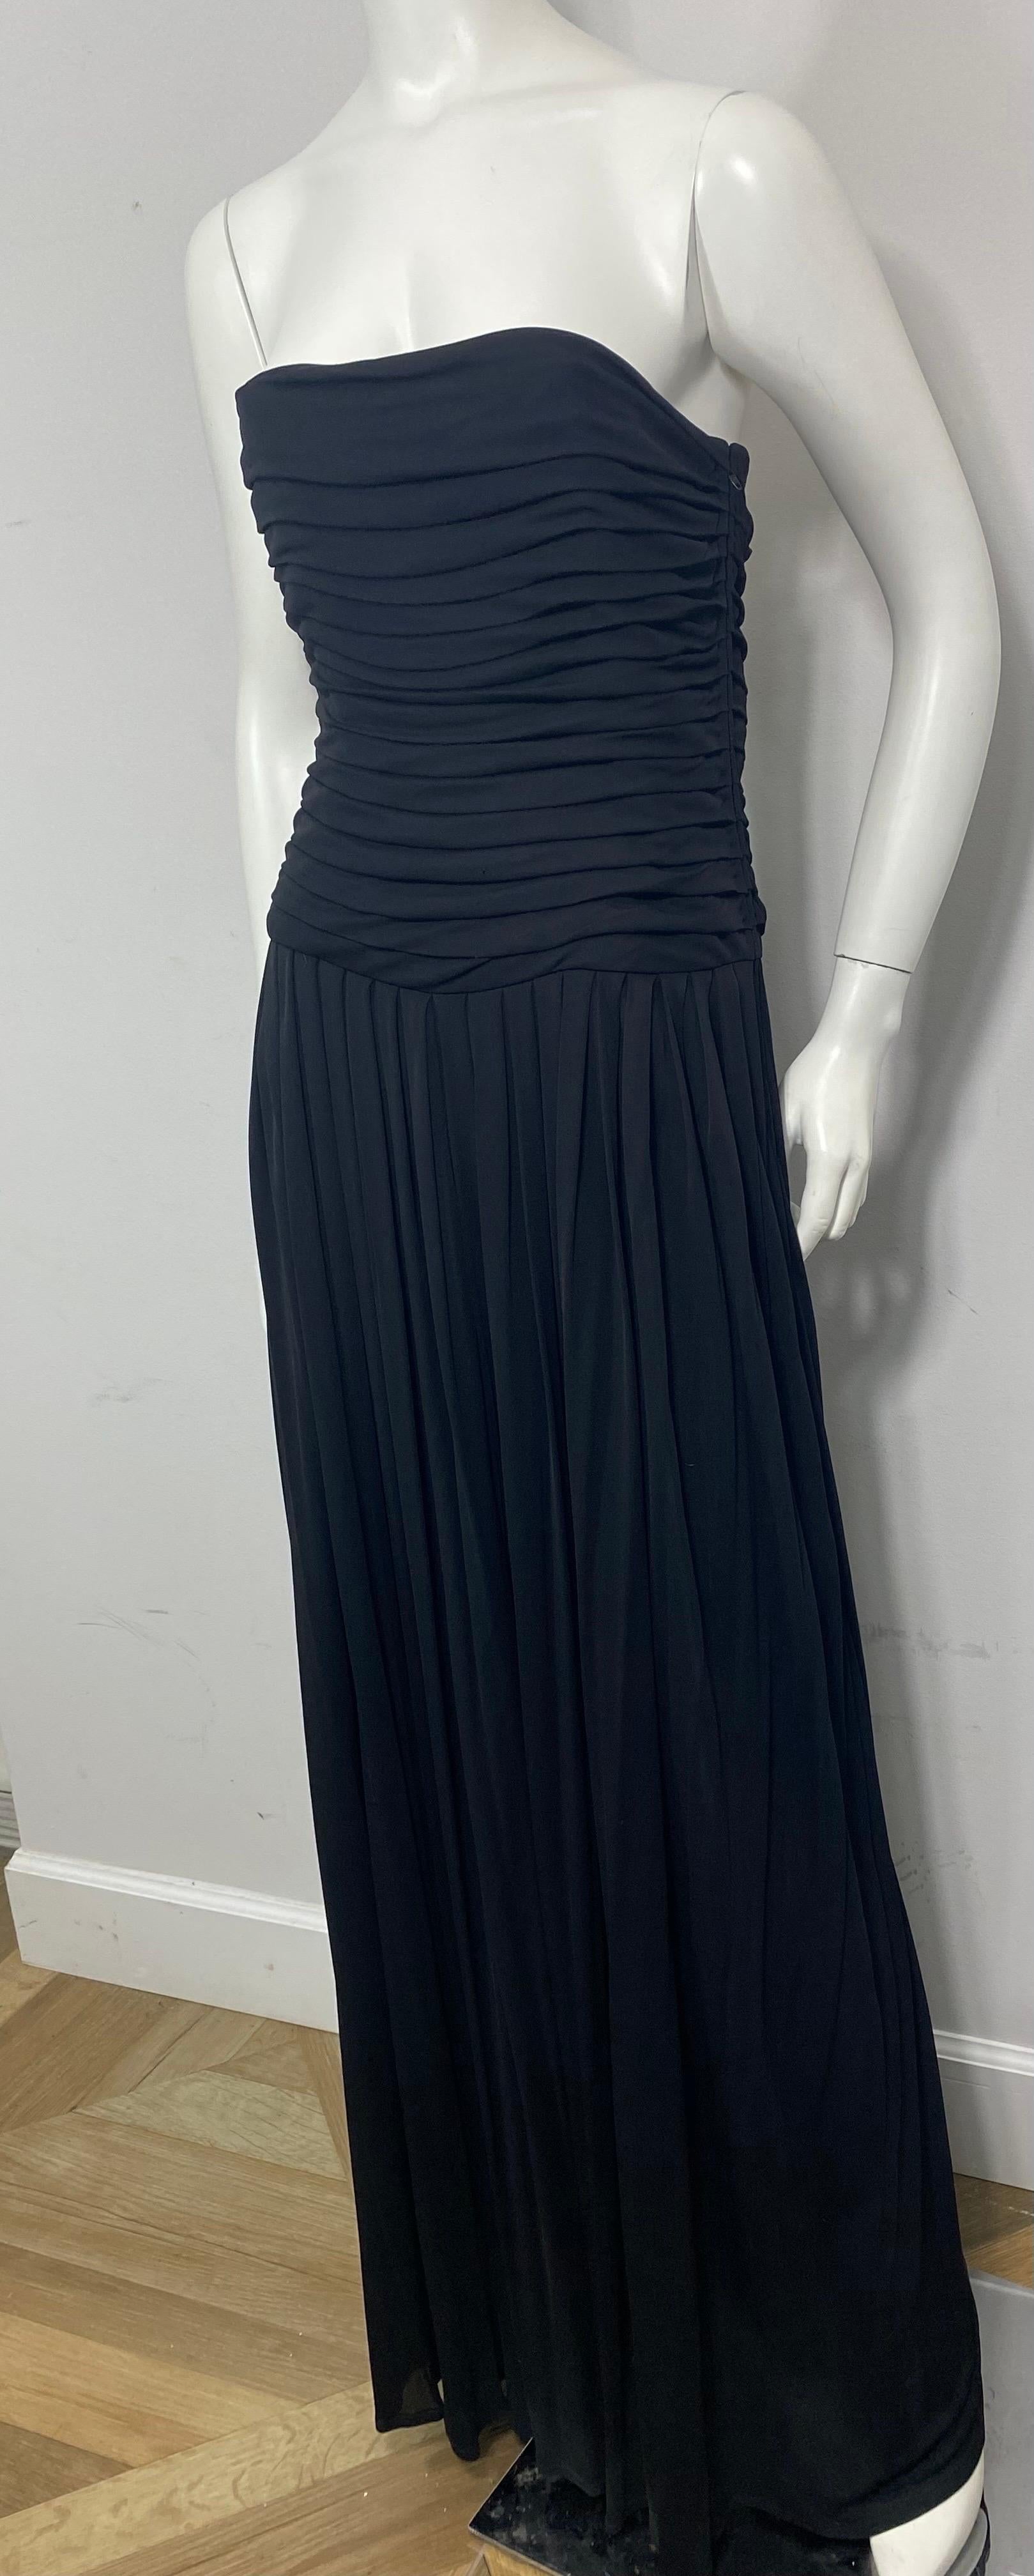 Lanvin 1970’s Black Shutter Pleat Matte Jersey Strapless Long Dress-Size 40 In Good Condition For Sale In West Palm Beach, FL